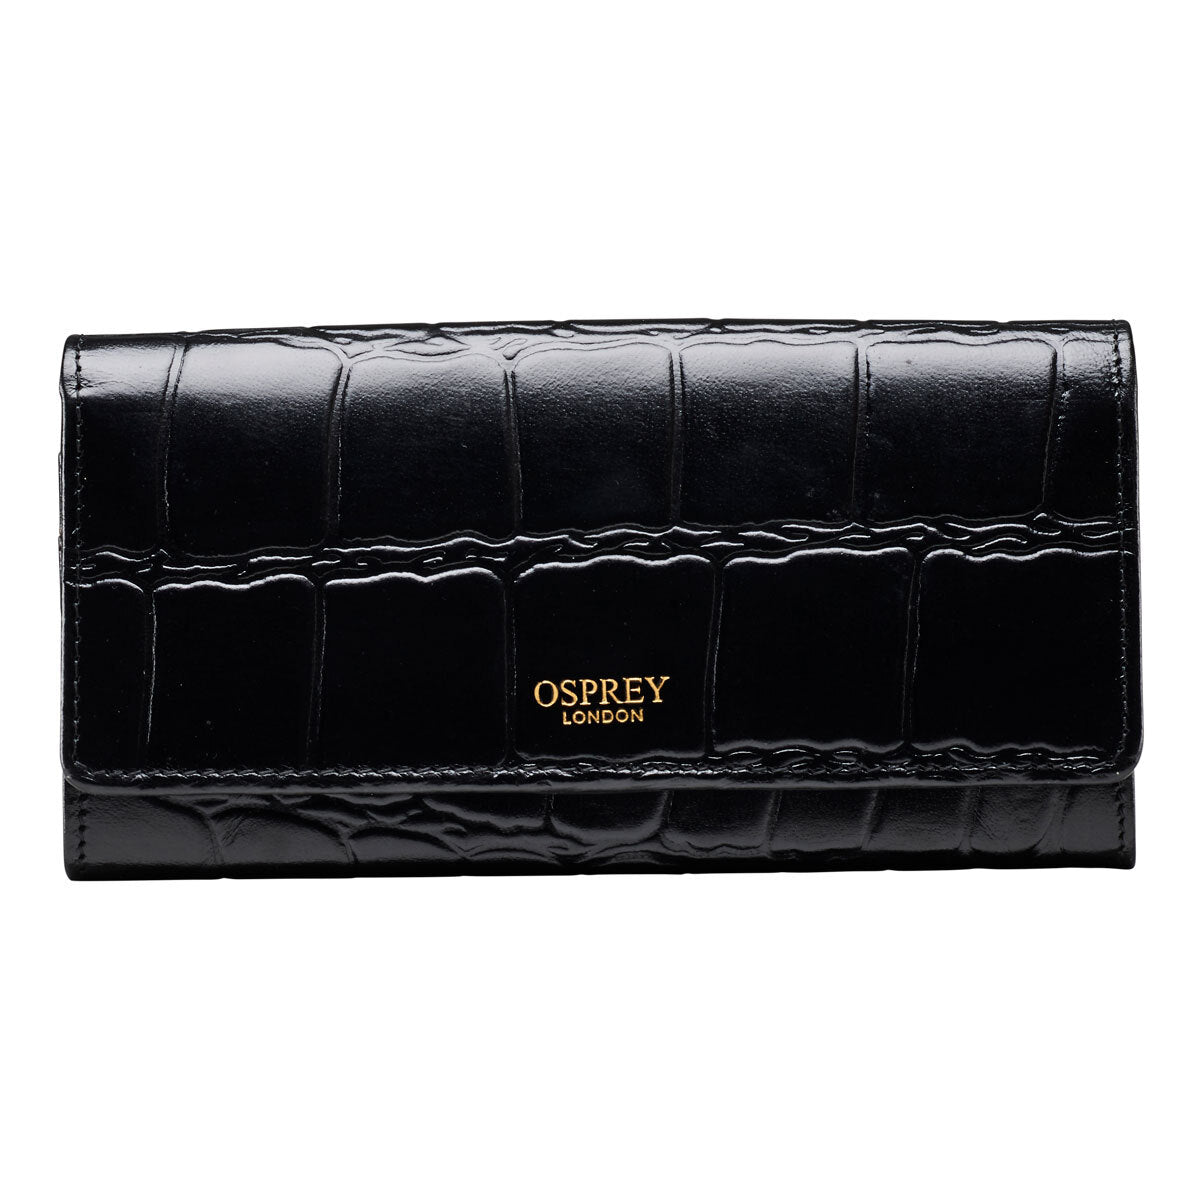 Osprey London Julia Croc Leather Women's Purse with Gift Box